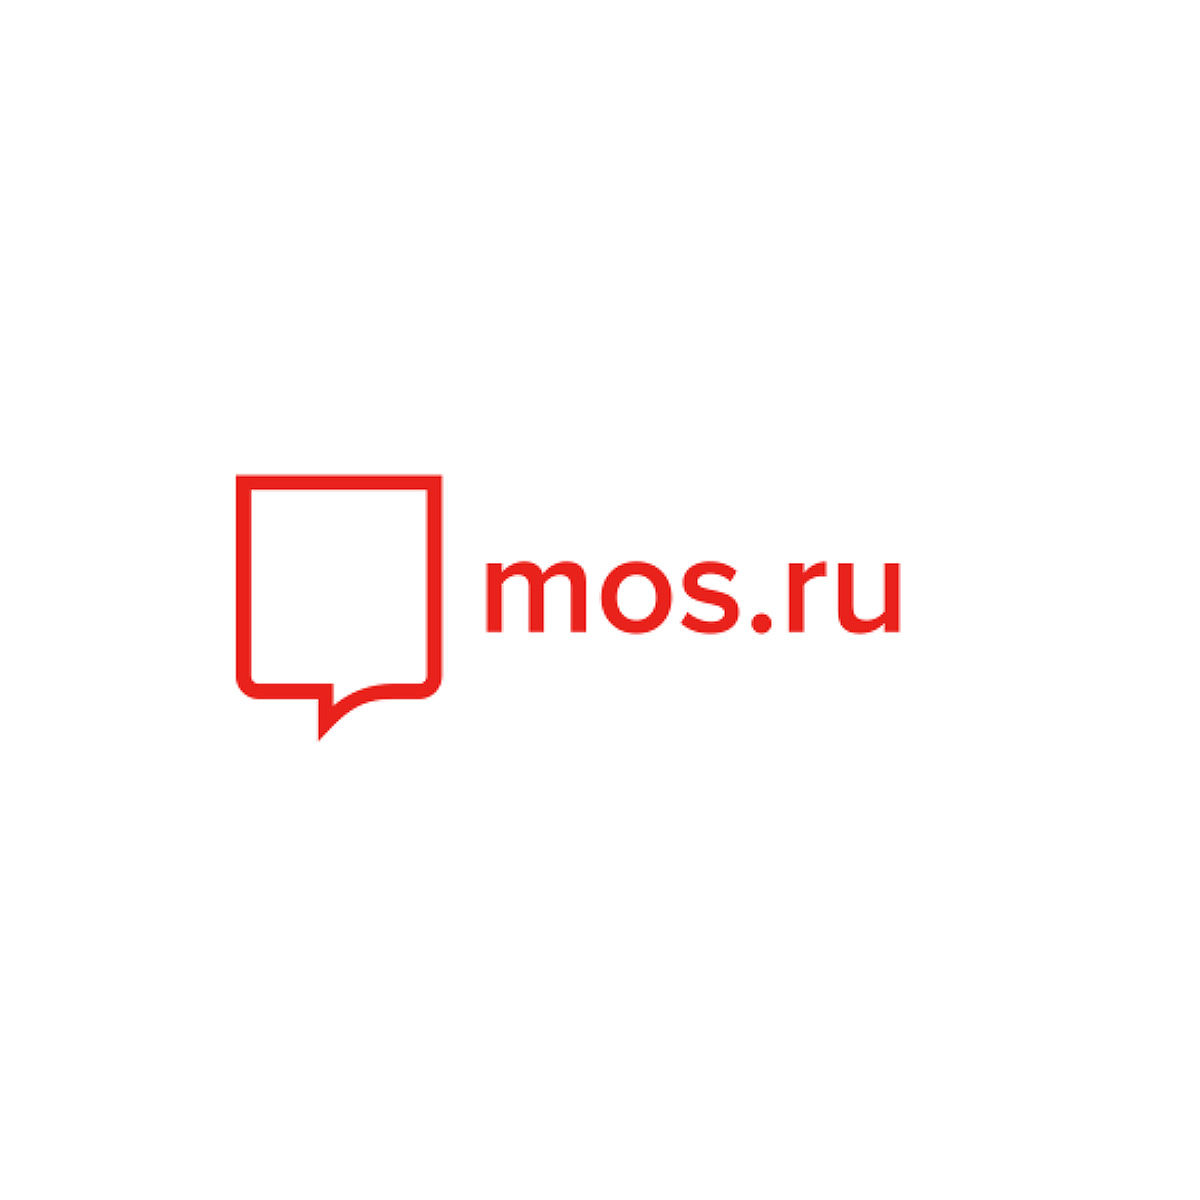 Мос ру 1с. Мос ру. Mos.ru лого. Мос ру картинки. Мос ру эмблема.